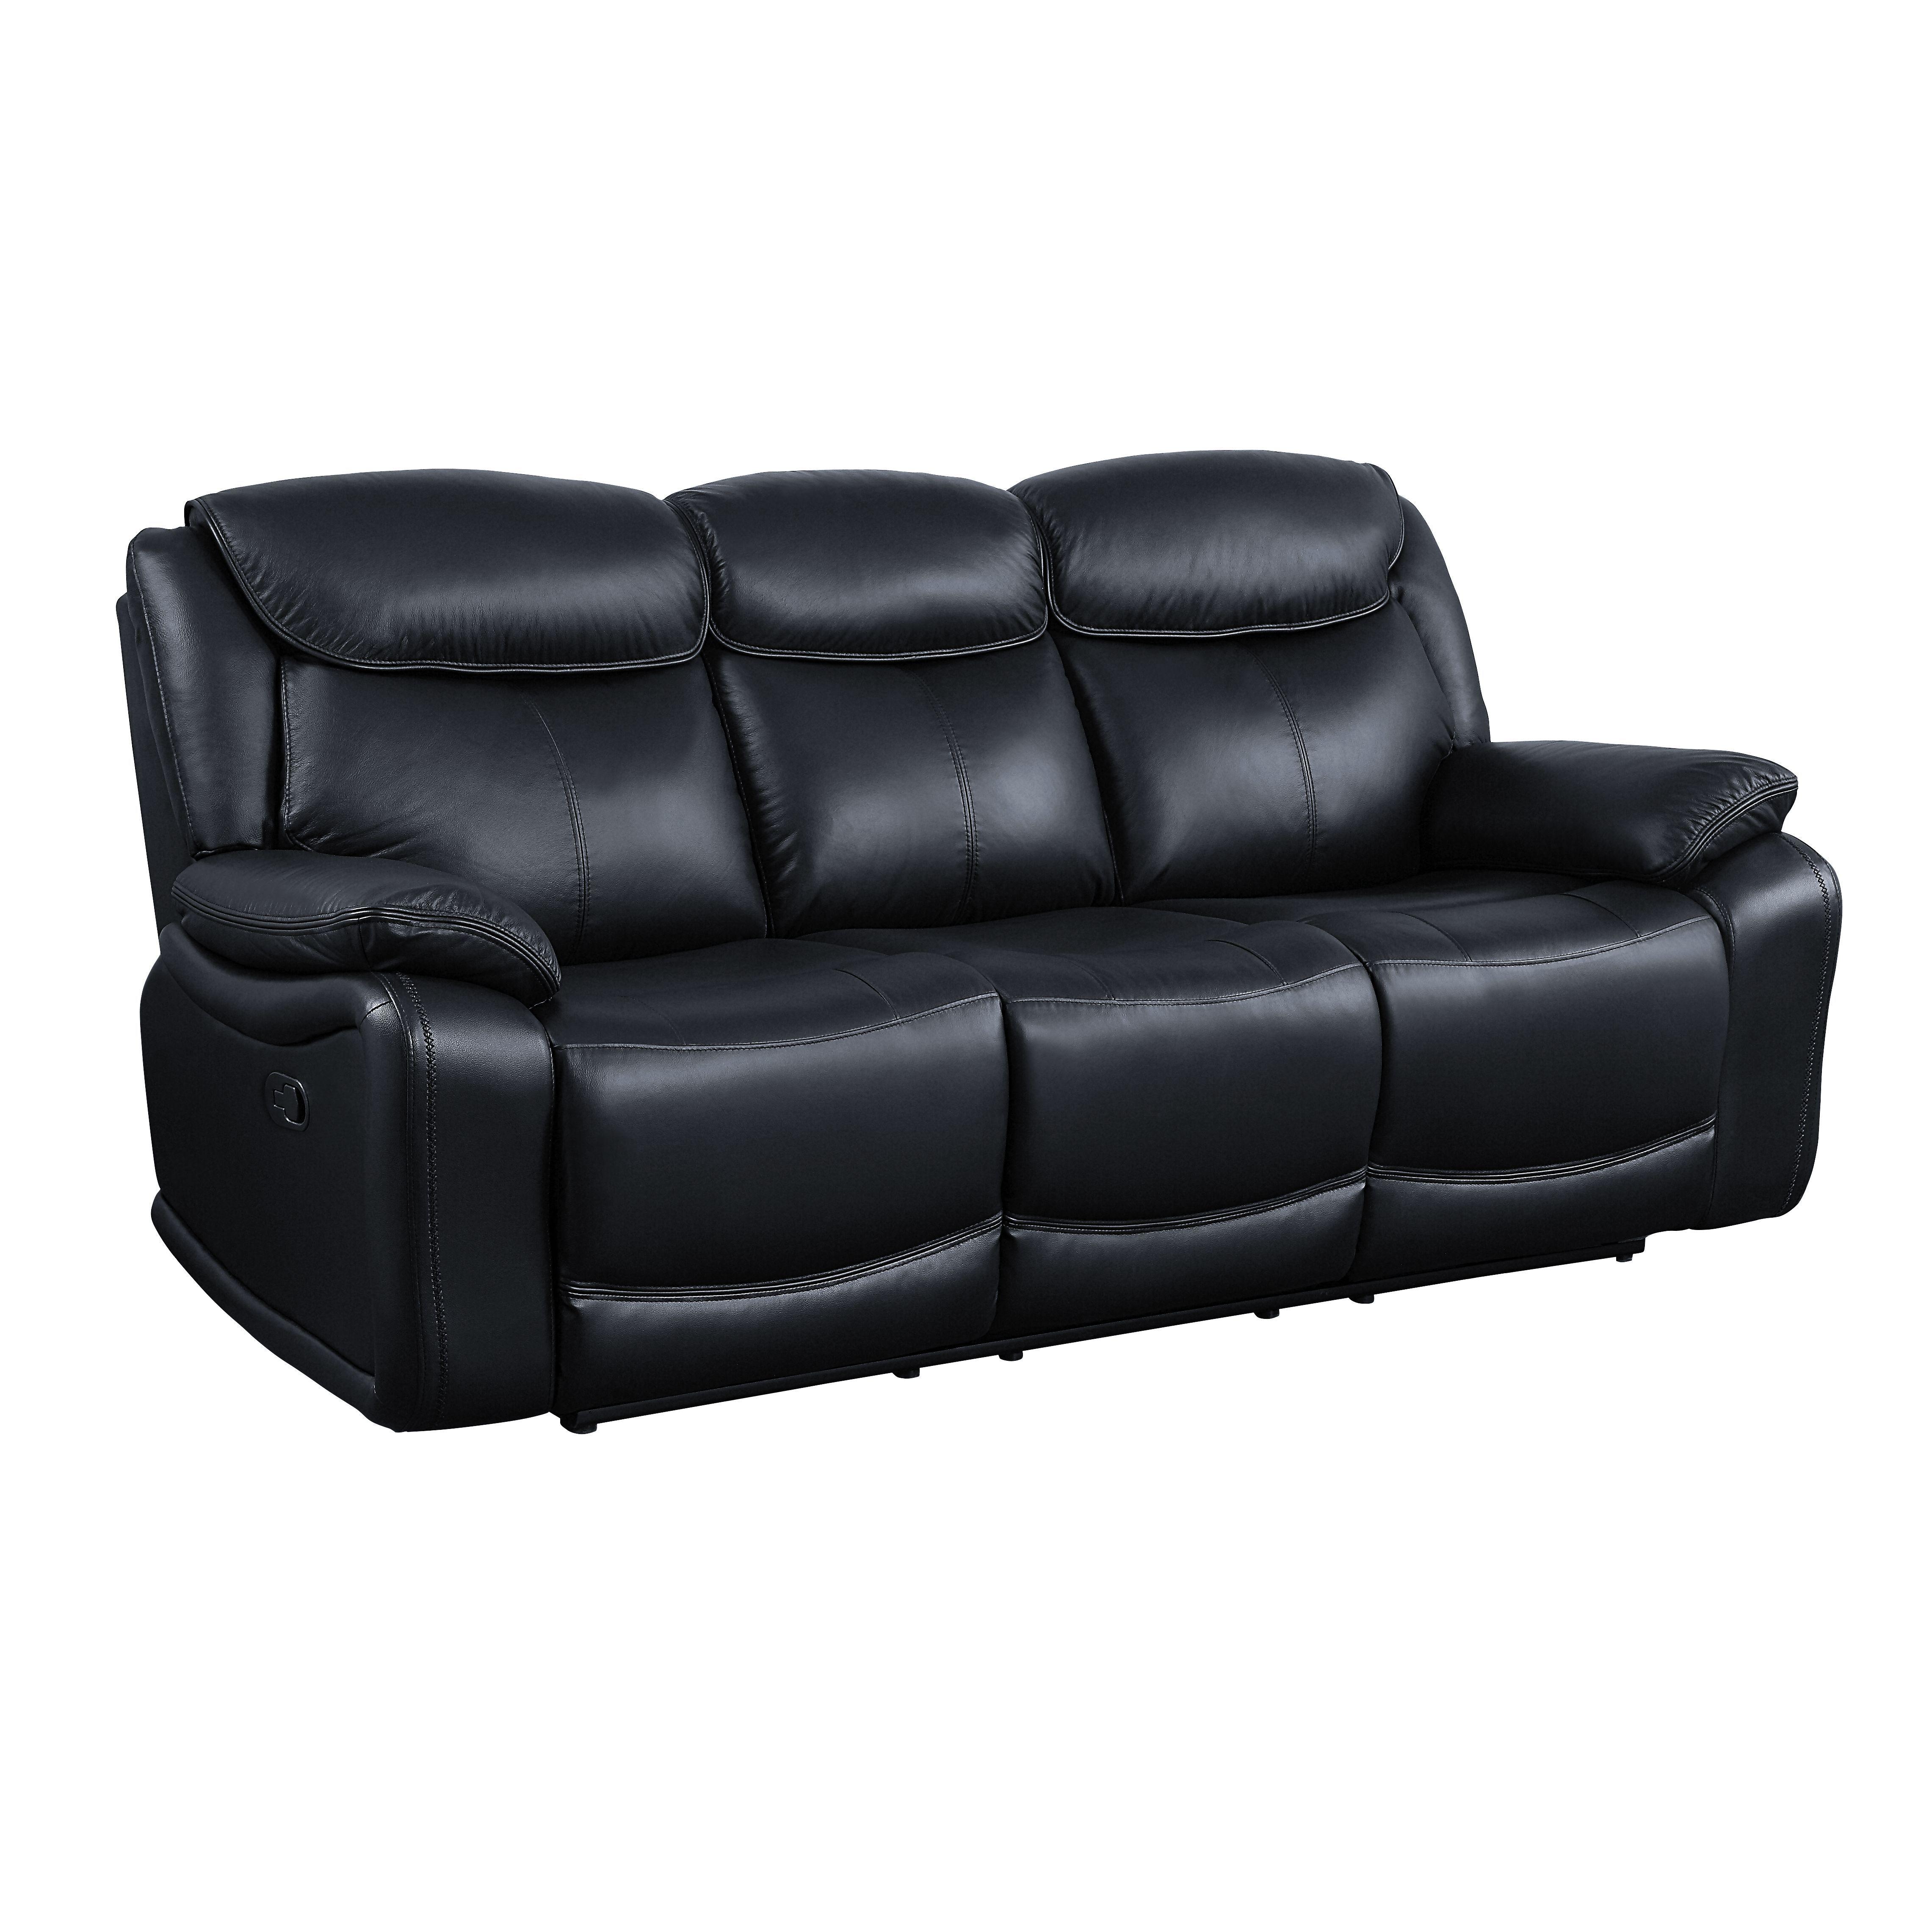 

    
LV00060-3pcs Acme Furniture Sofa Loveseat and Chair Set
